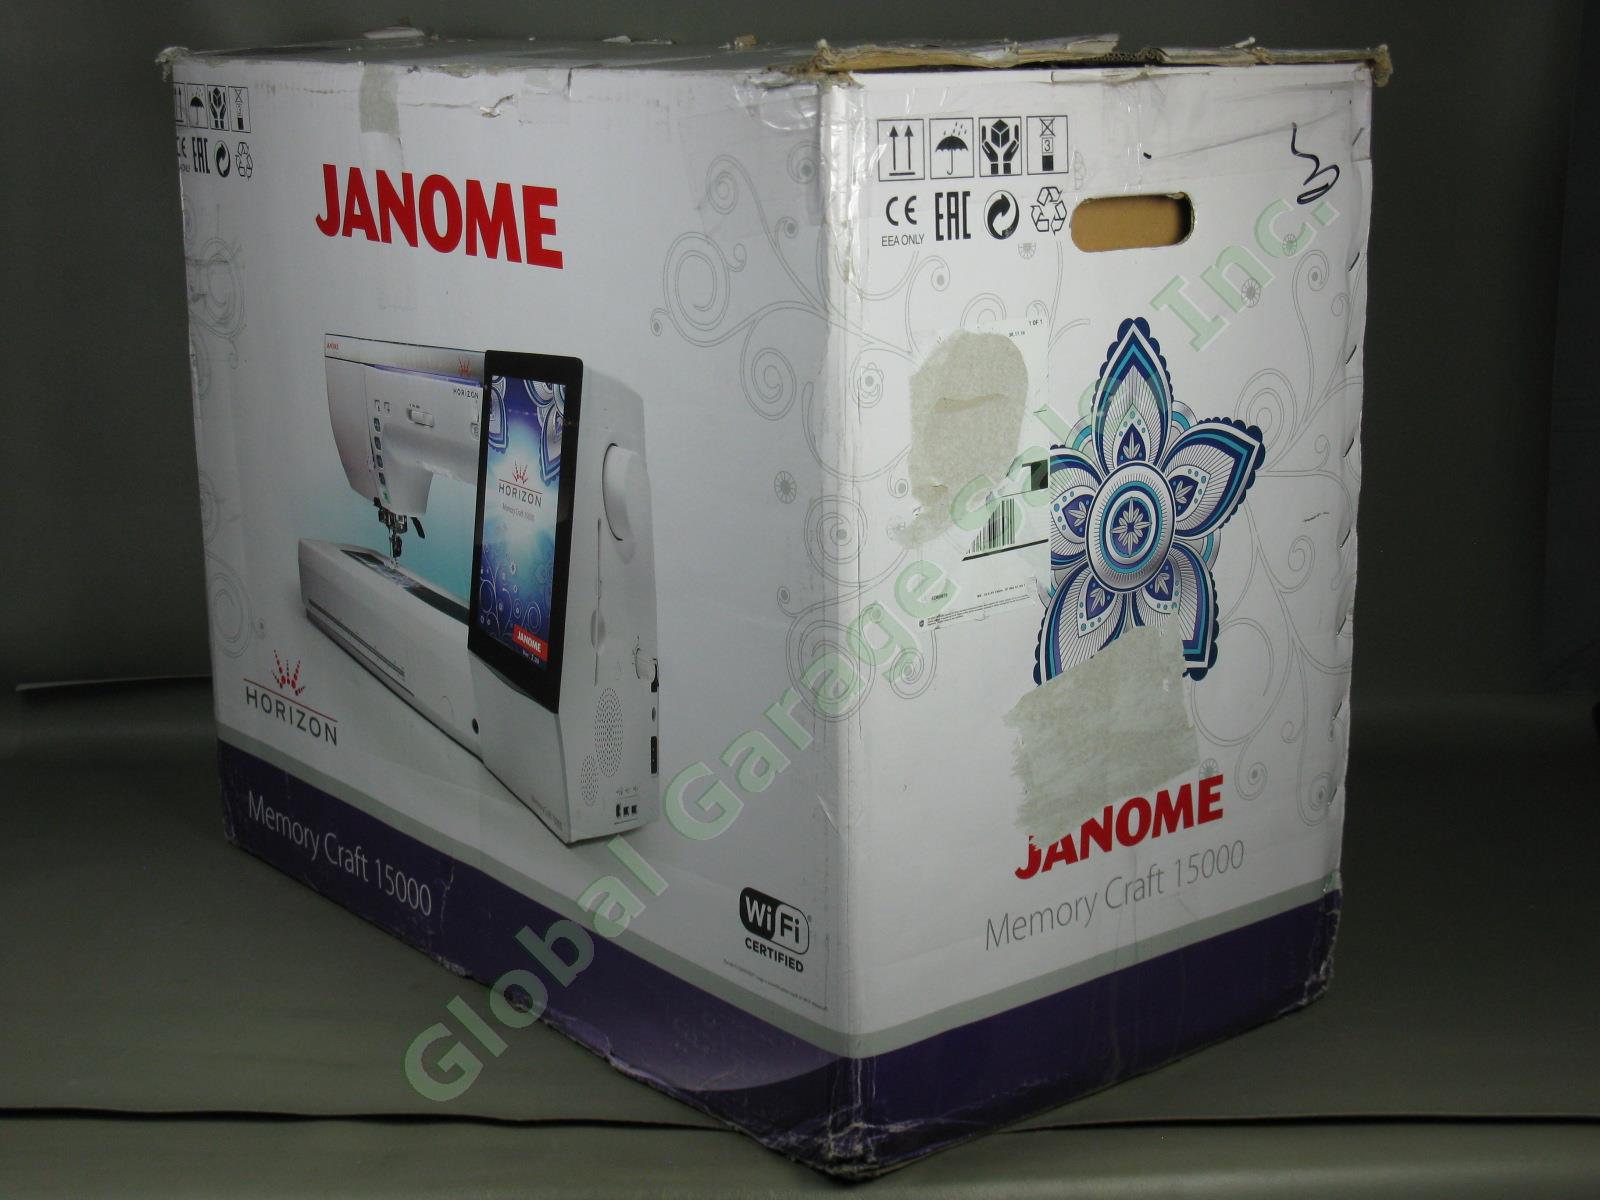 Janome Horizon Memory Craft MC 15000 Sewing Embroidery Machine 2 HOURS! Vers 3.0 49